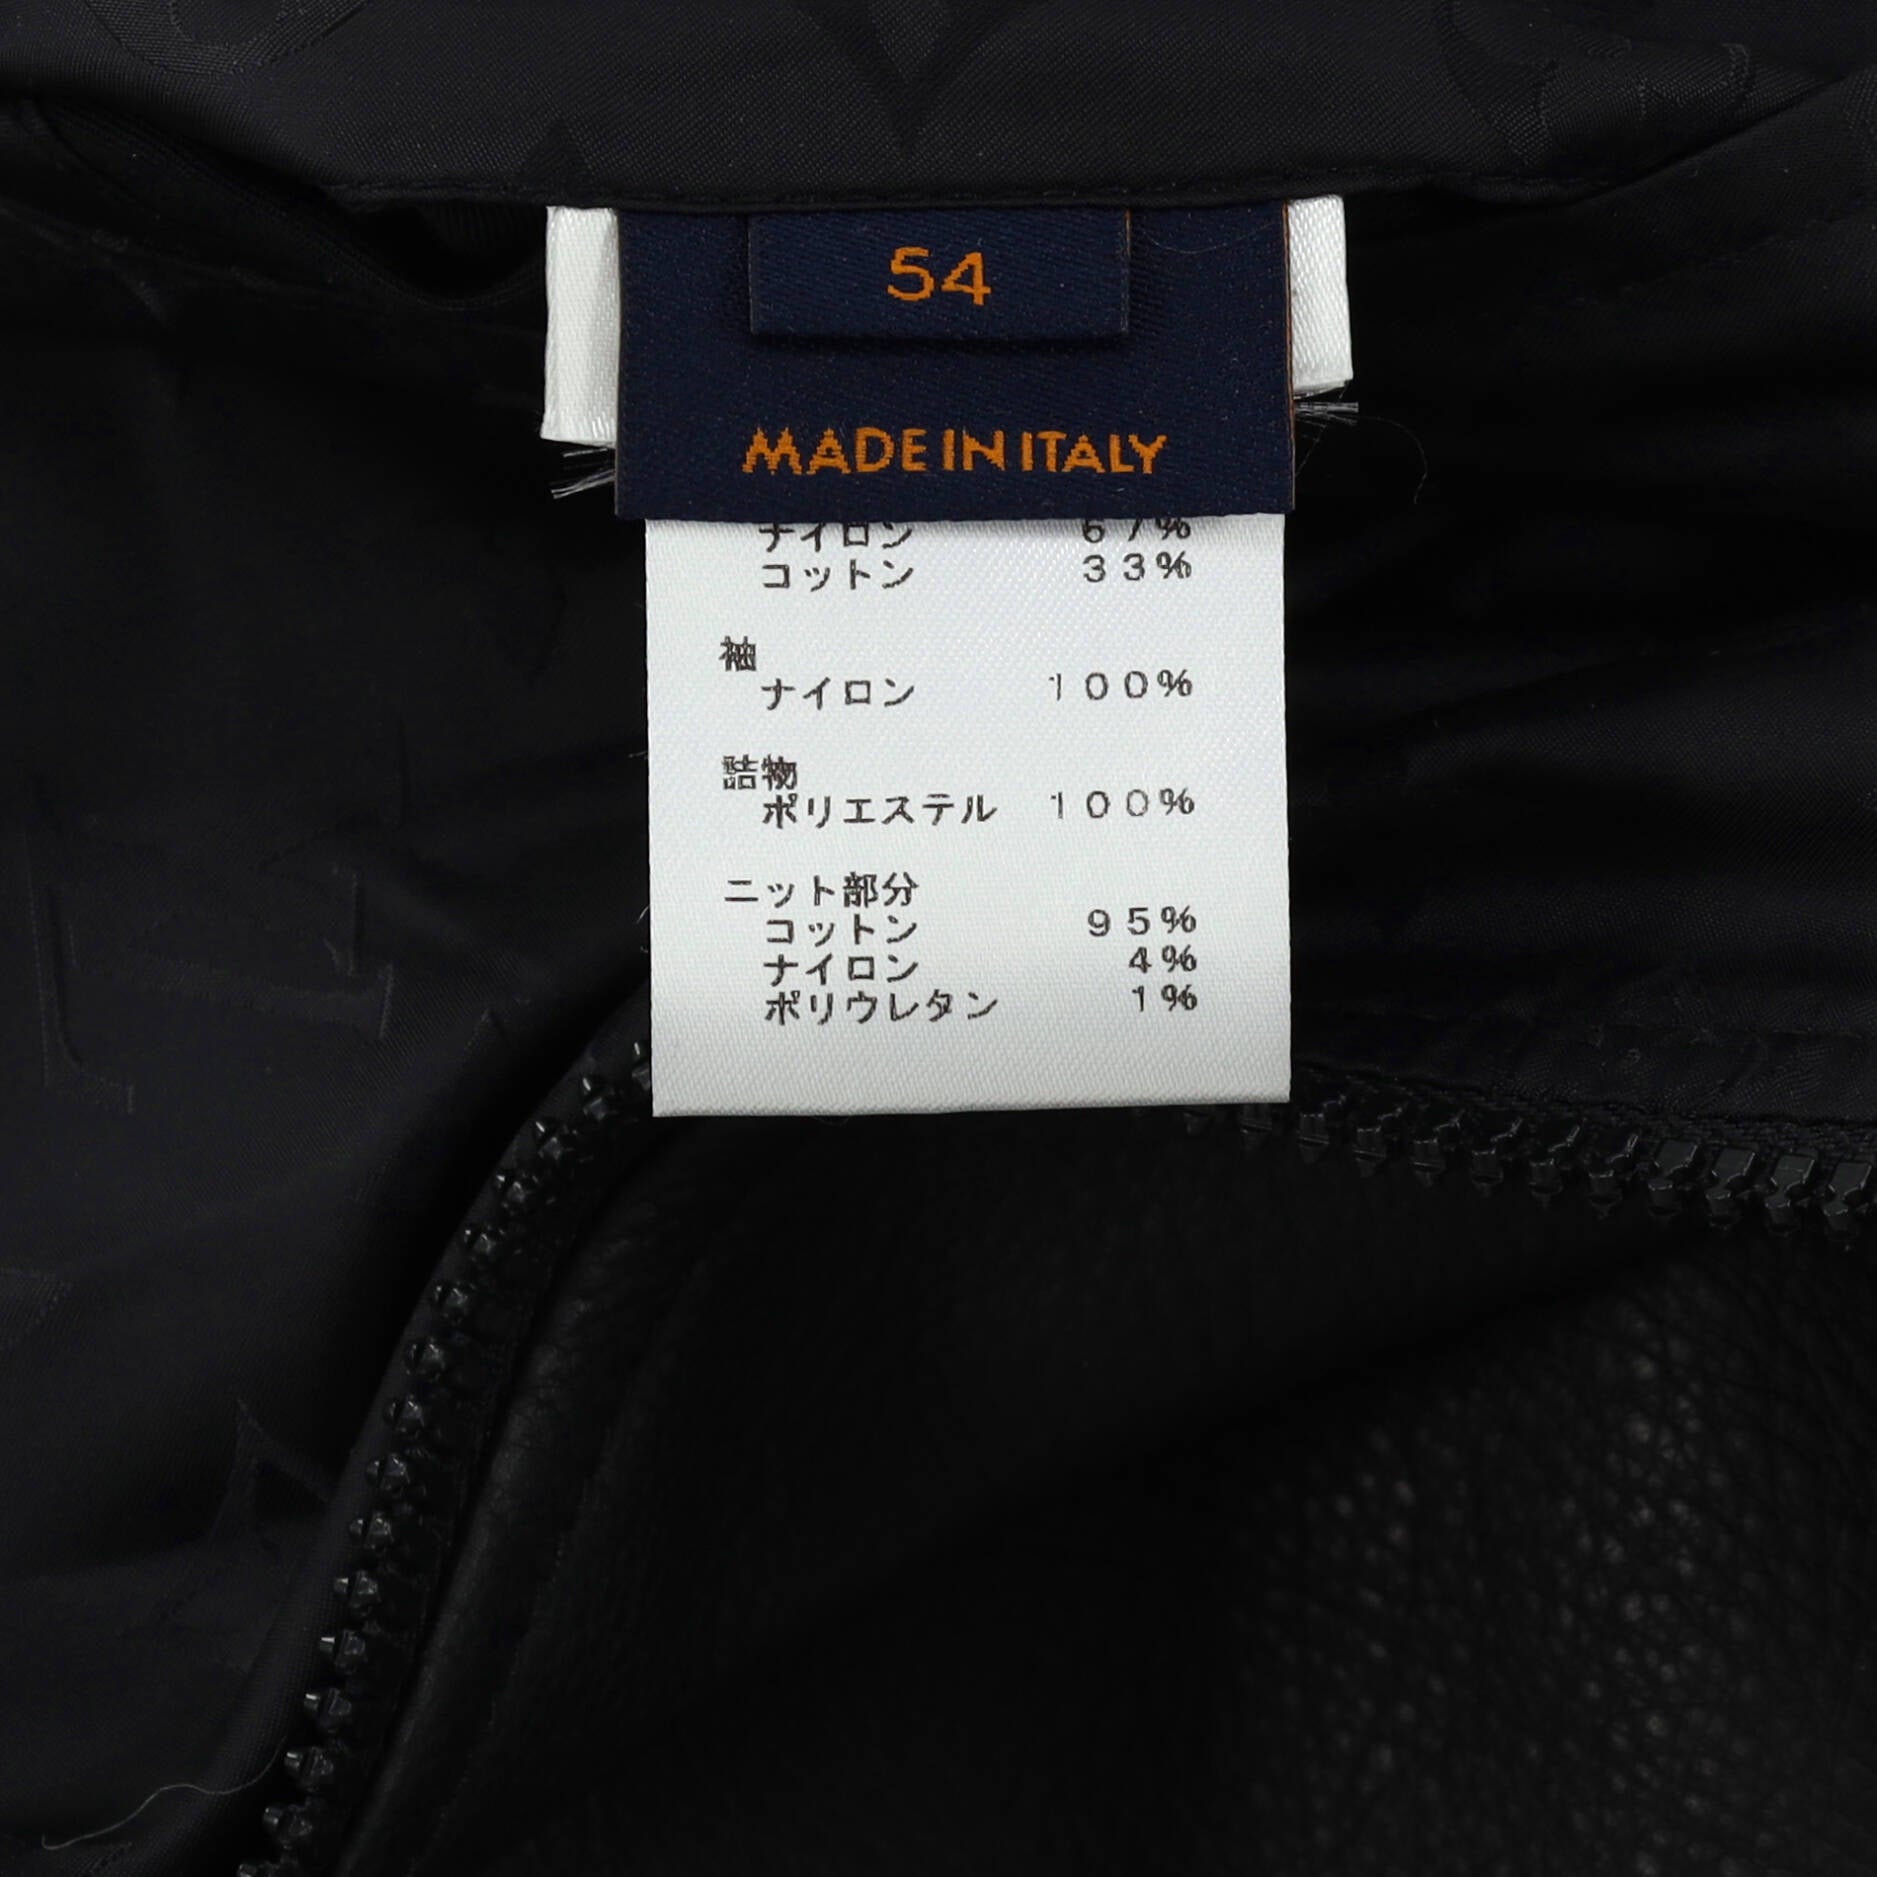 Louis Vuitton Men's Reversible Bomber Jacket Leather and Nylon